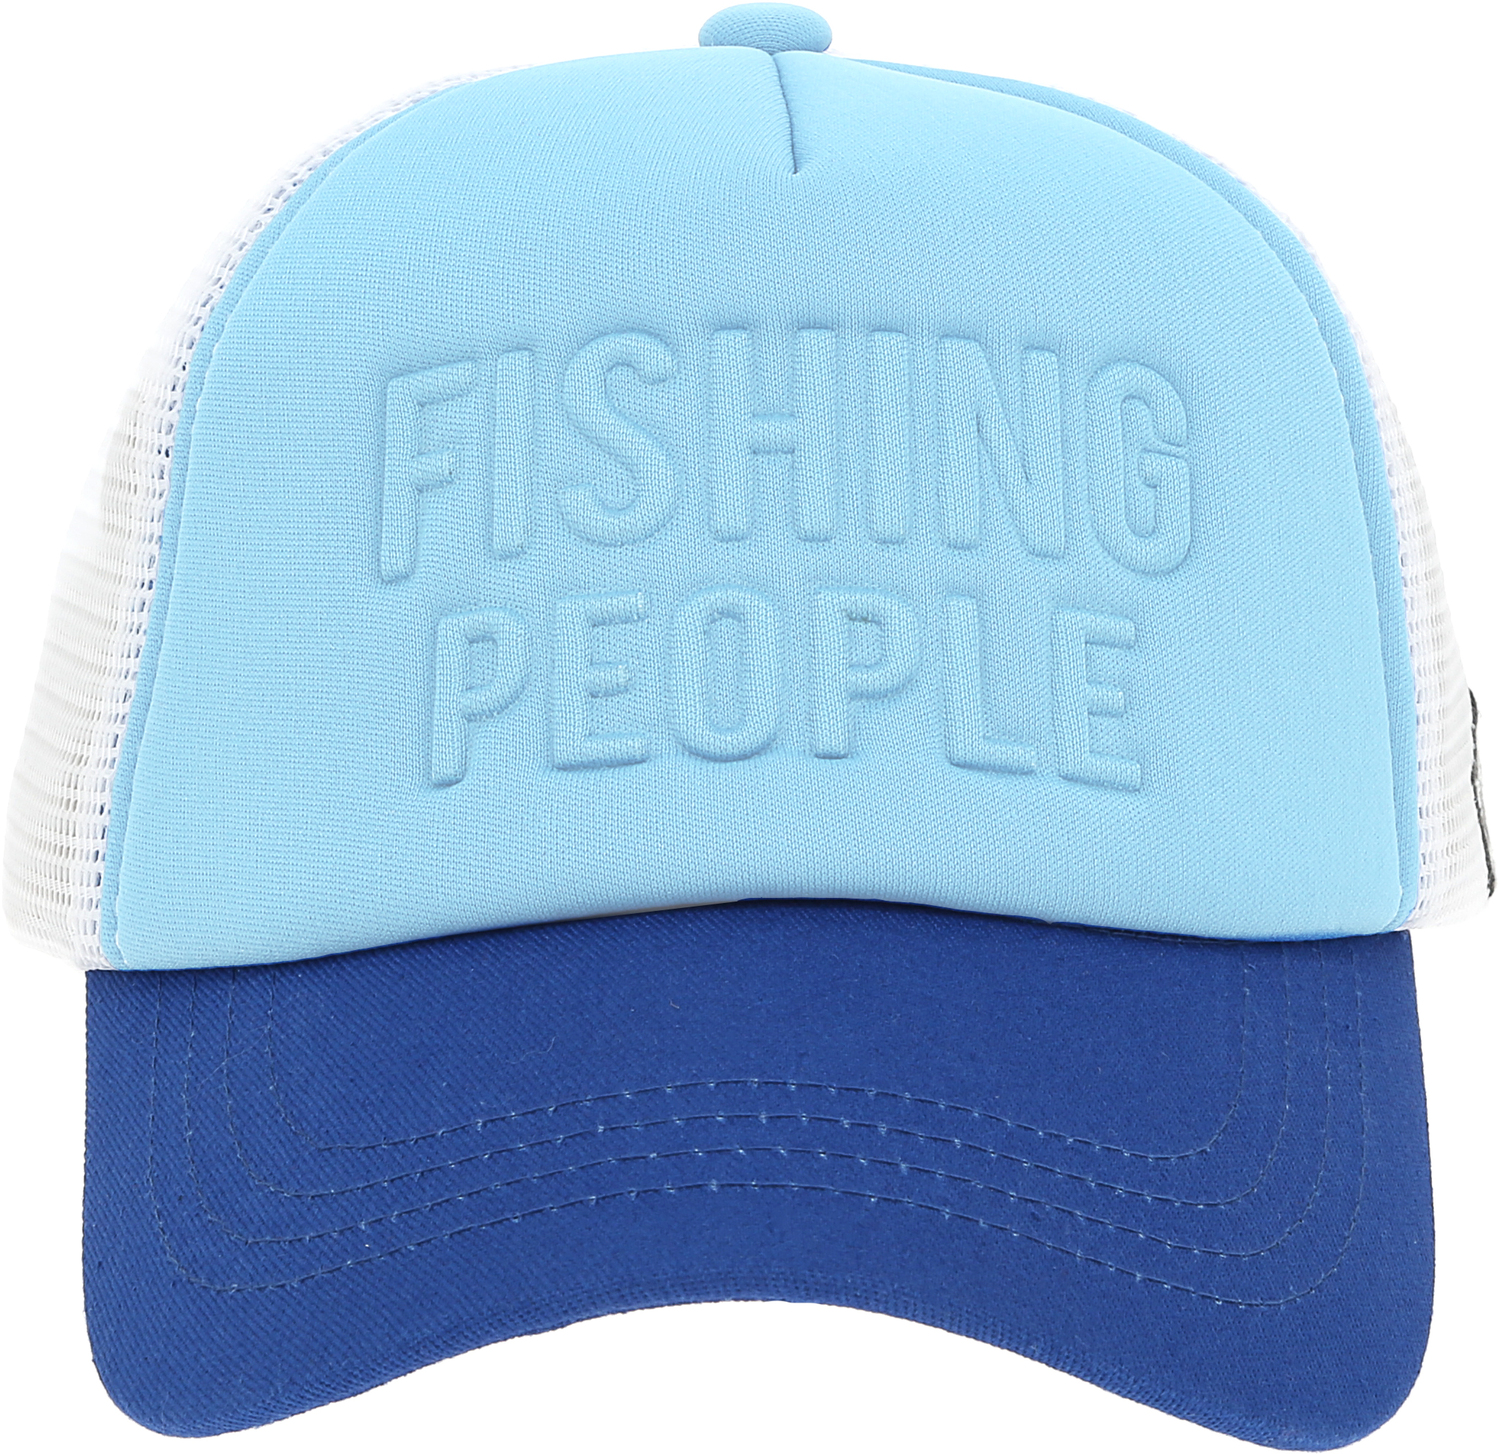 Fishing People by We People - Fishing People - Adjustable Cyan Neoprene Mesh Hat